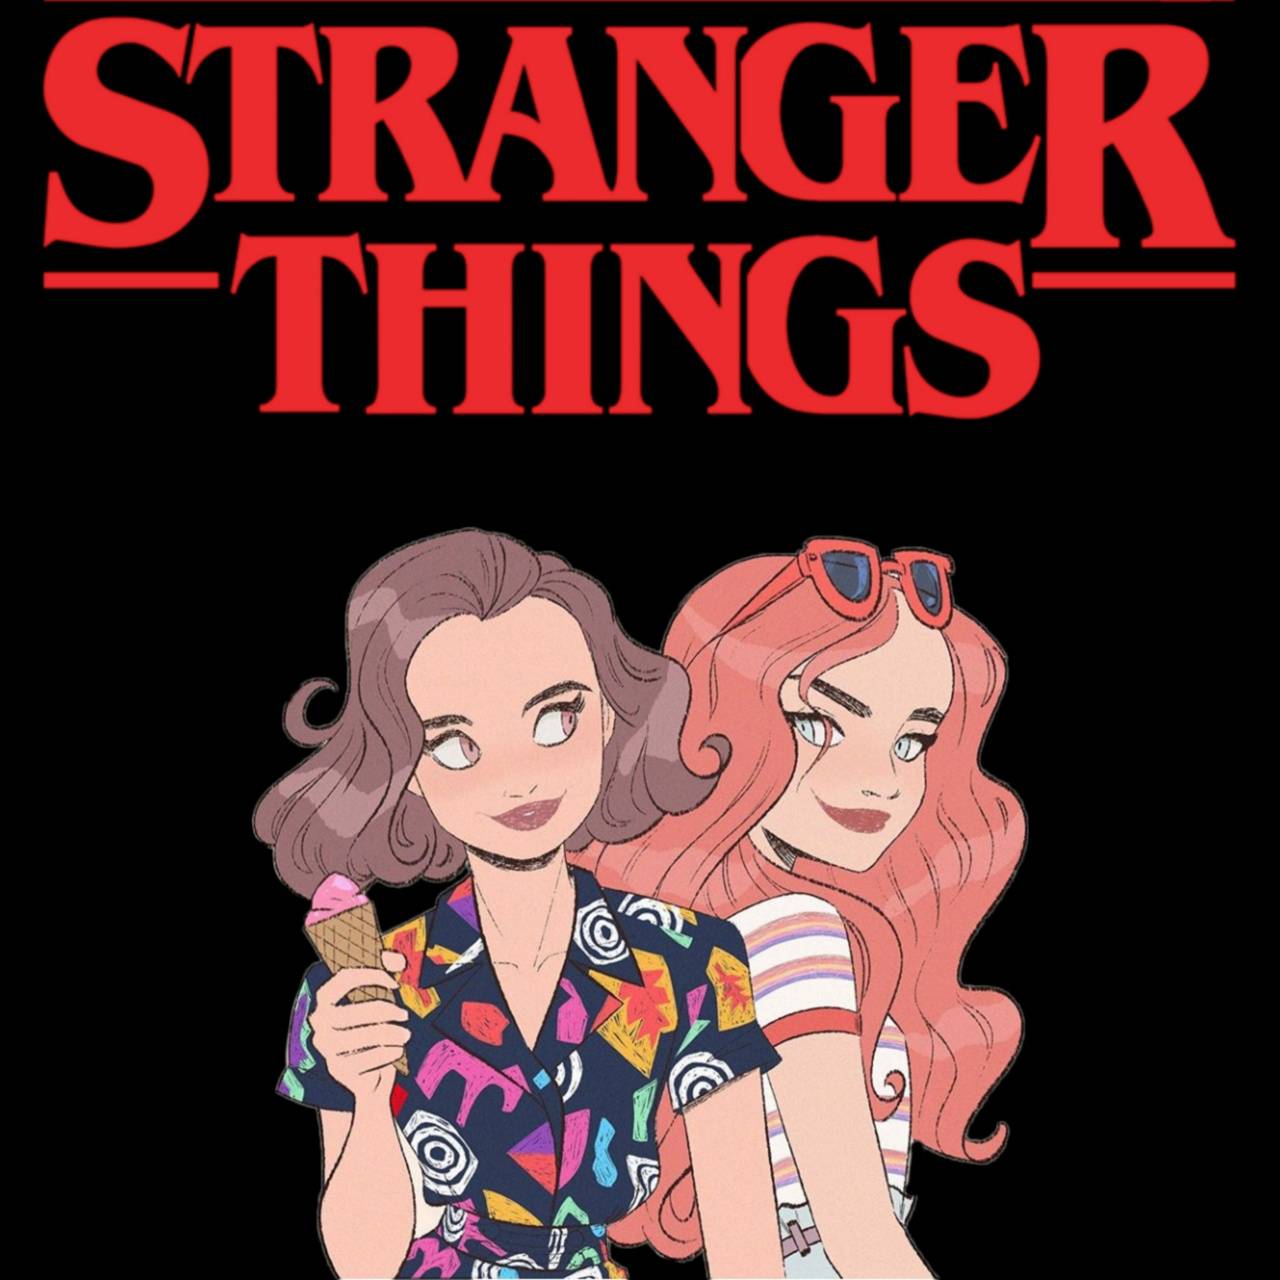 Stranger Things Mad Max  Matériel de dessin, Stranger things, Fond ecran